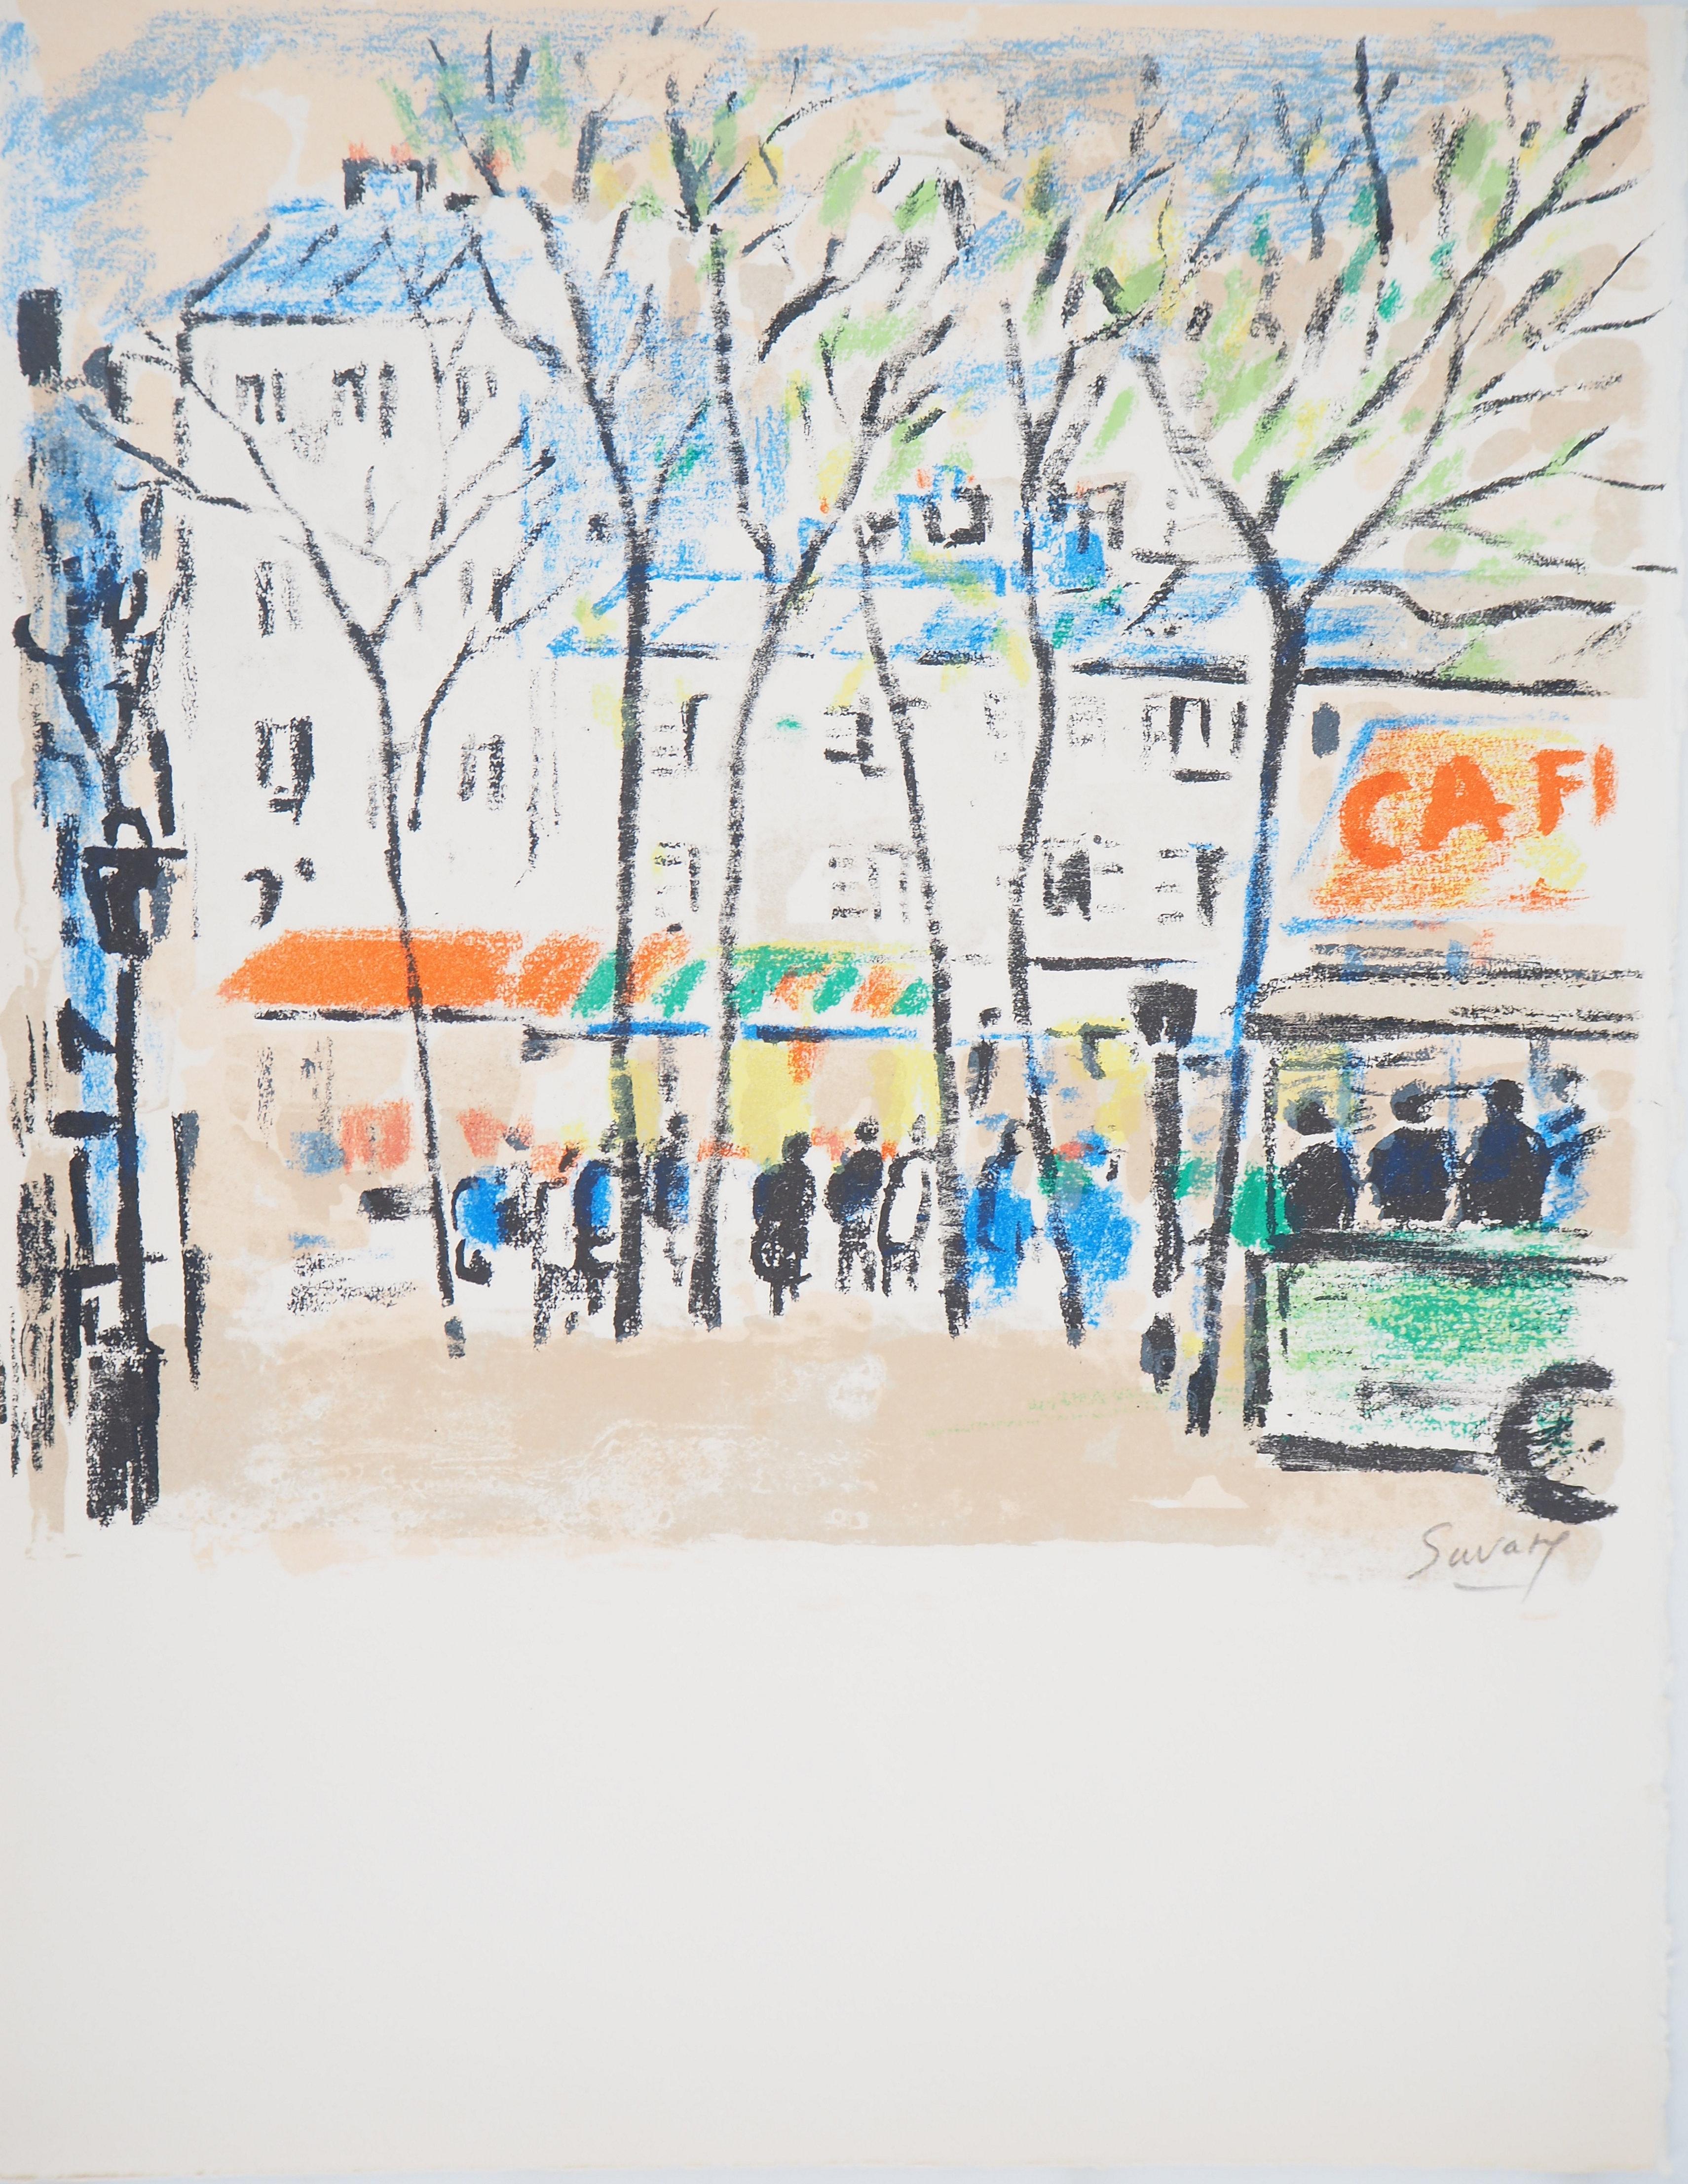 Robert Savary Landscape Print - Paris : Street Market - Original Lithograph, Handsigned